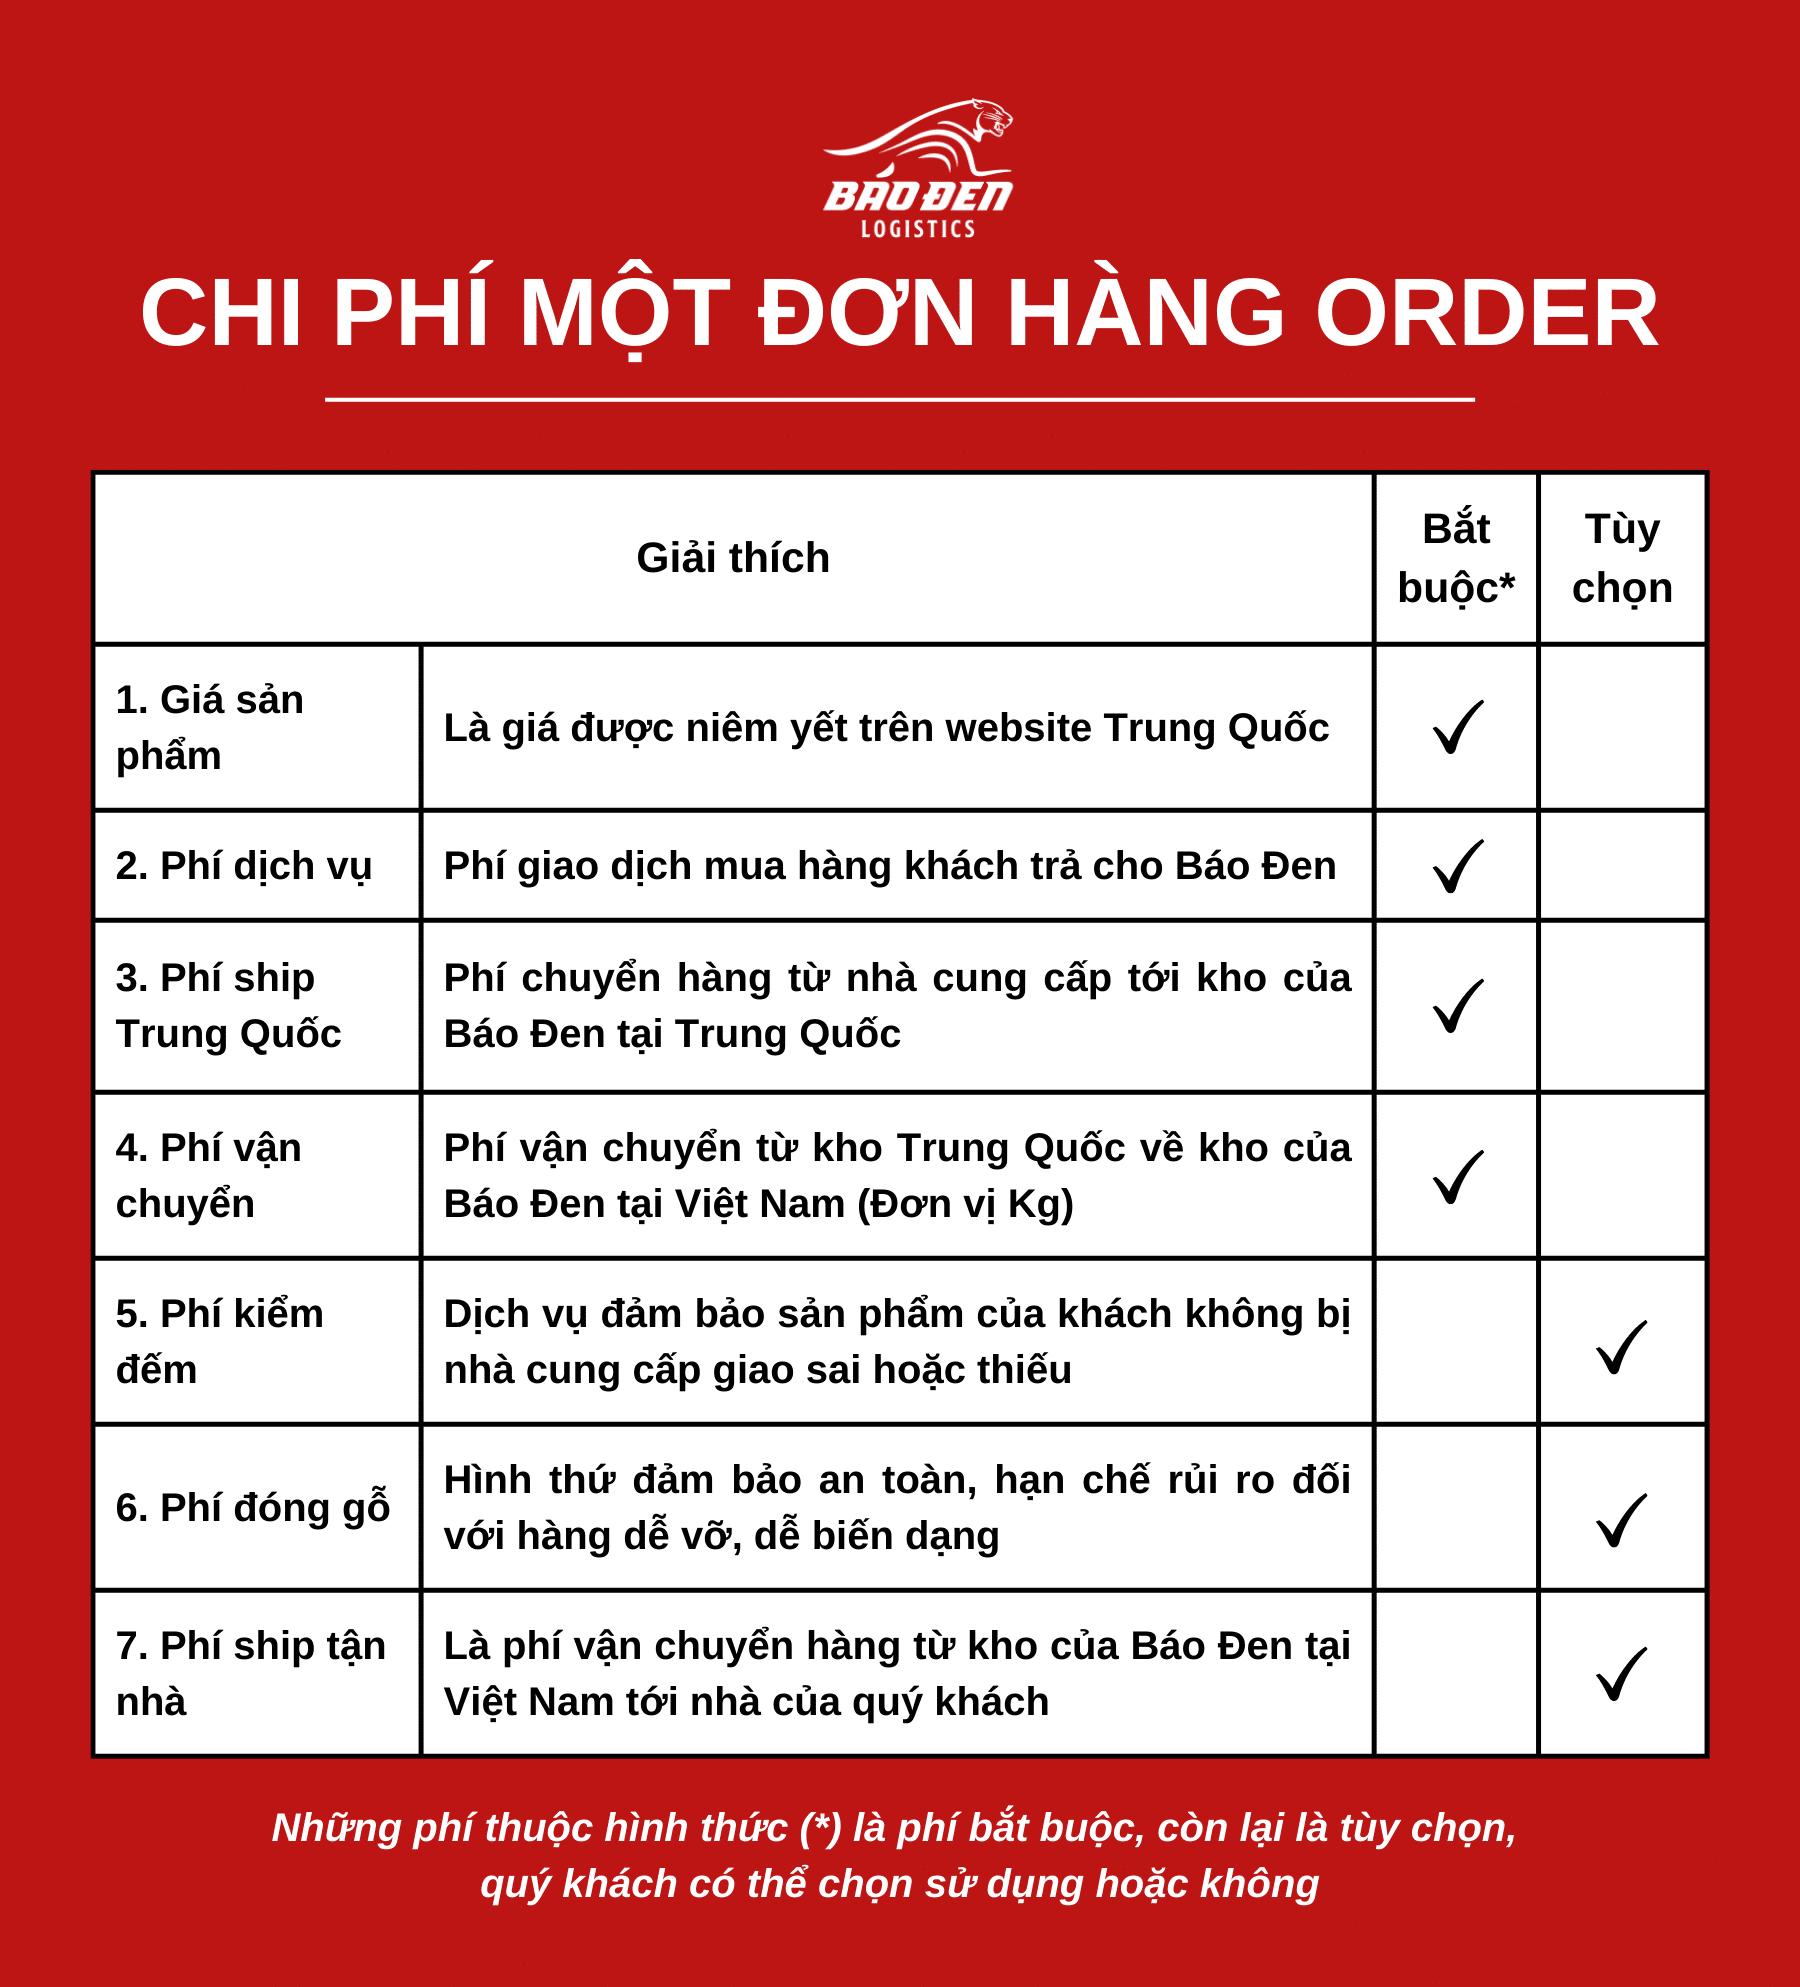 Chi phi mot don hang order 2